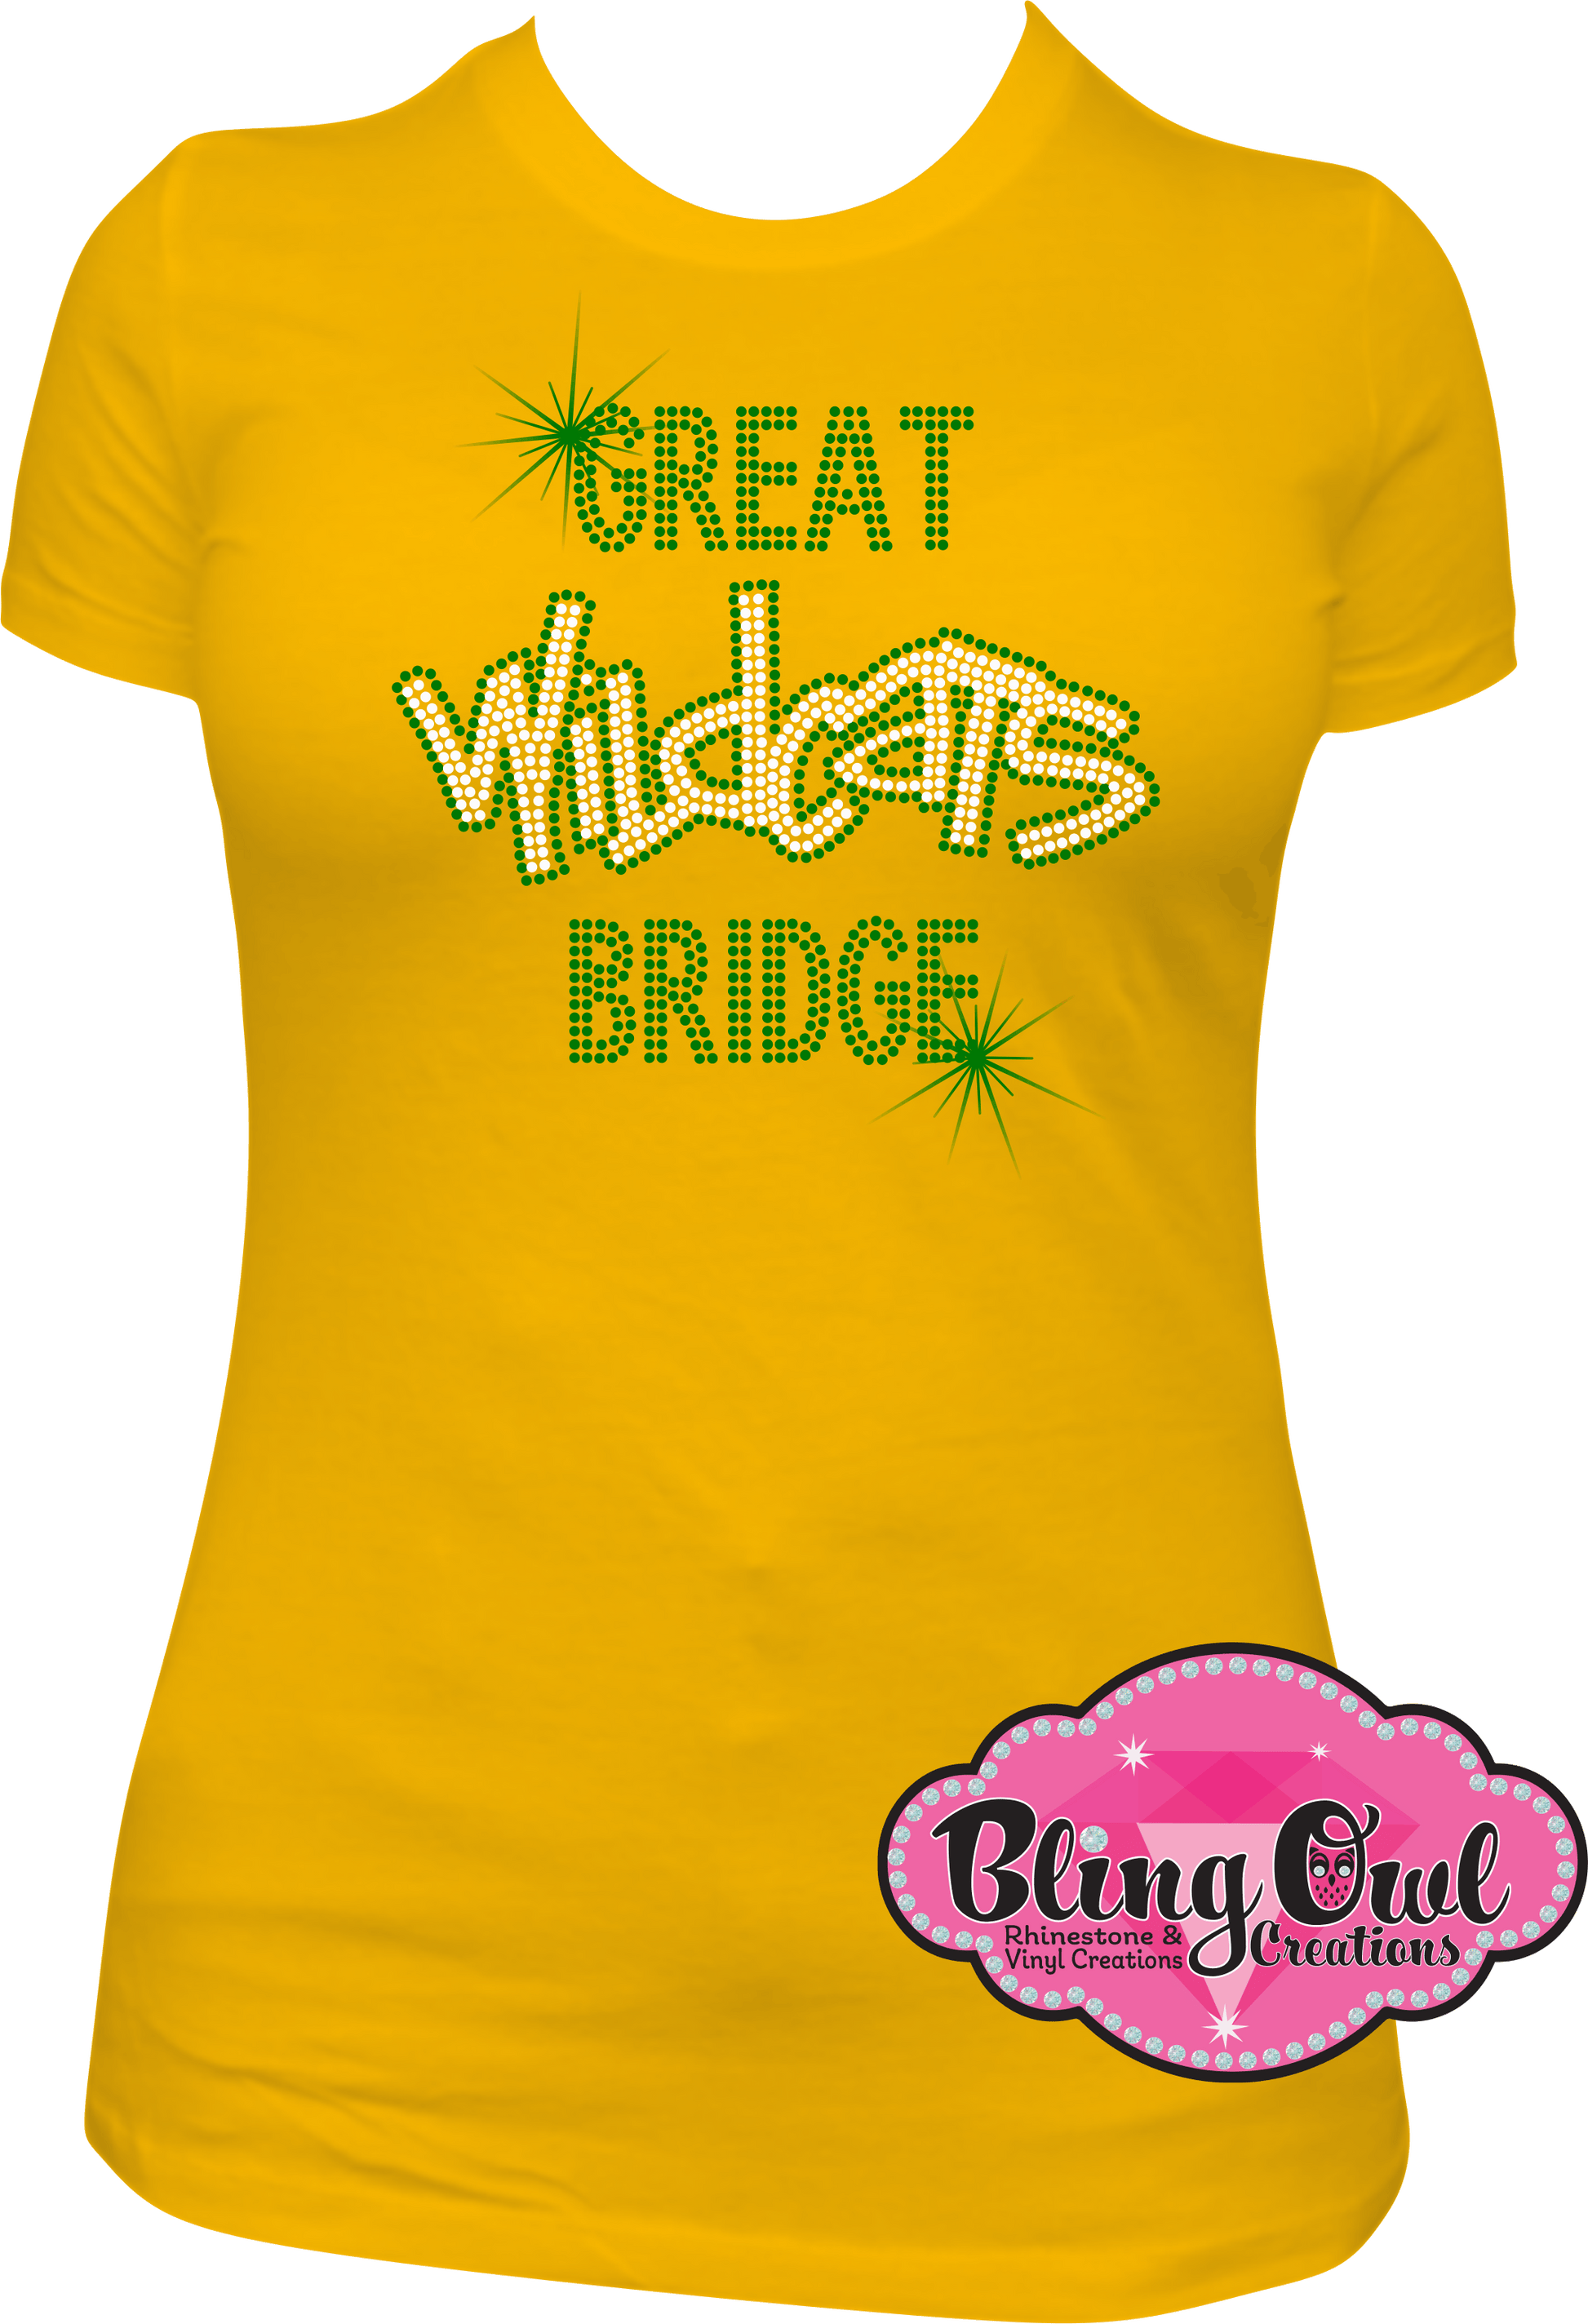 great_bridge  wildcats school_spirit_wear rhinestones sparkle bling